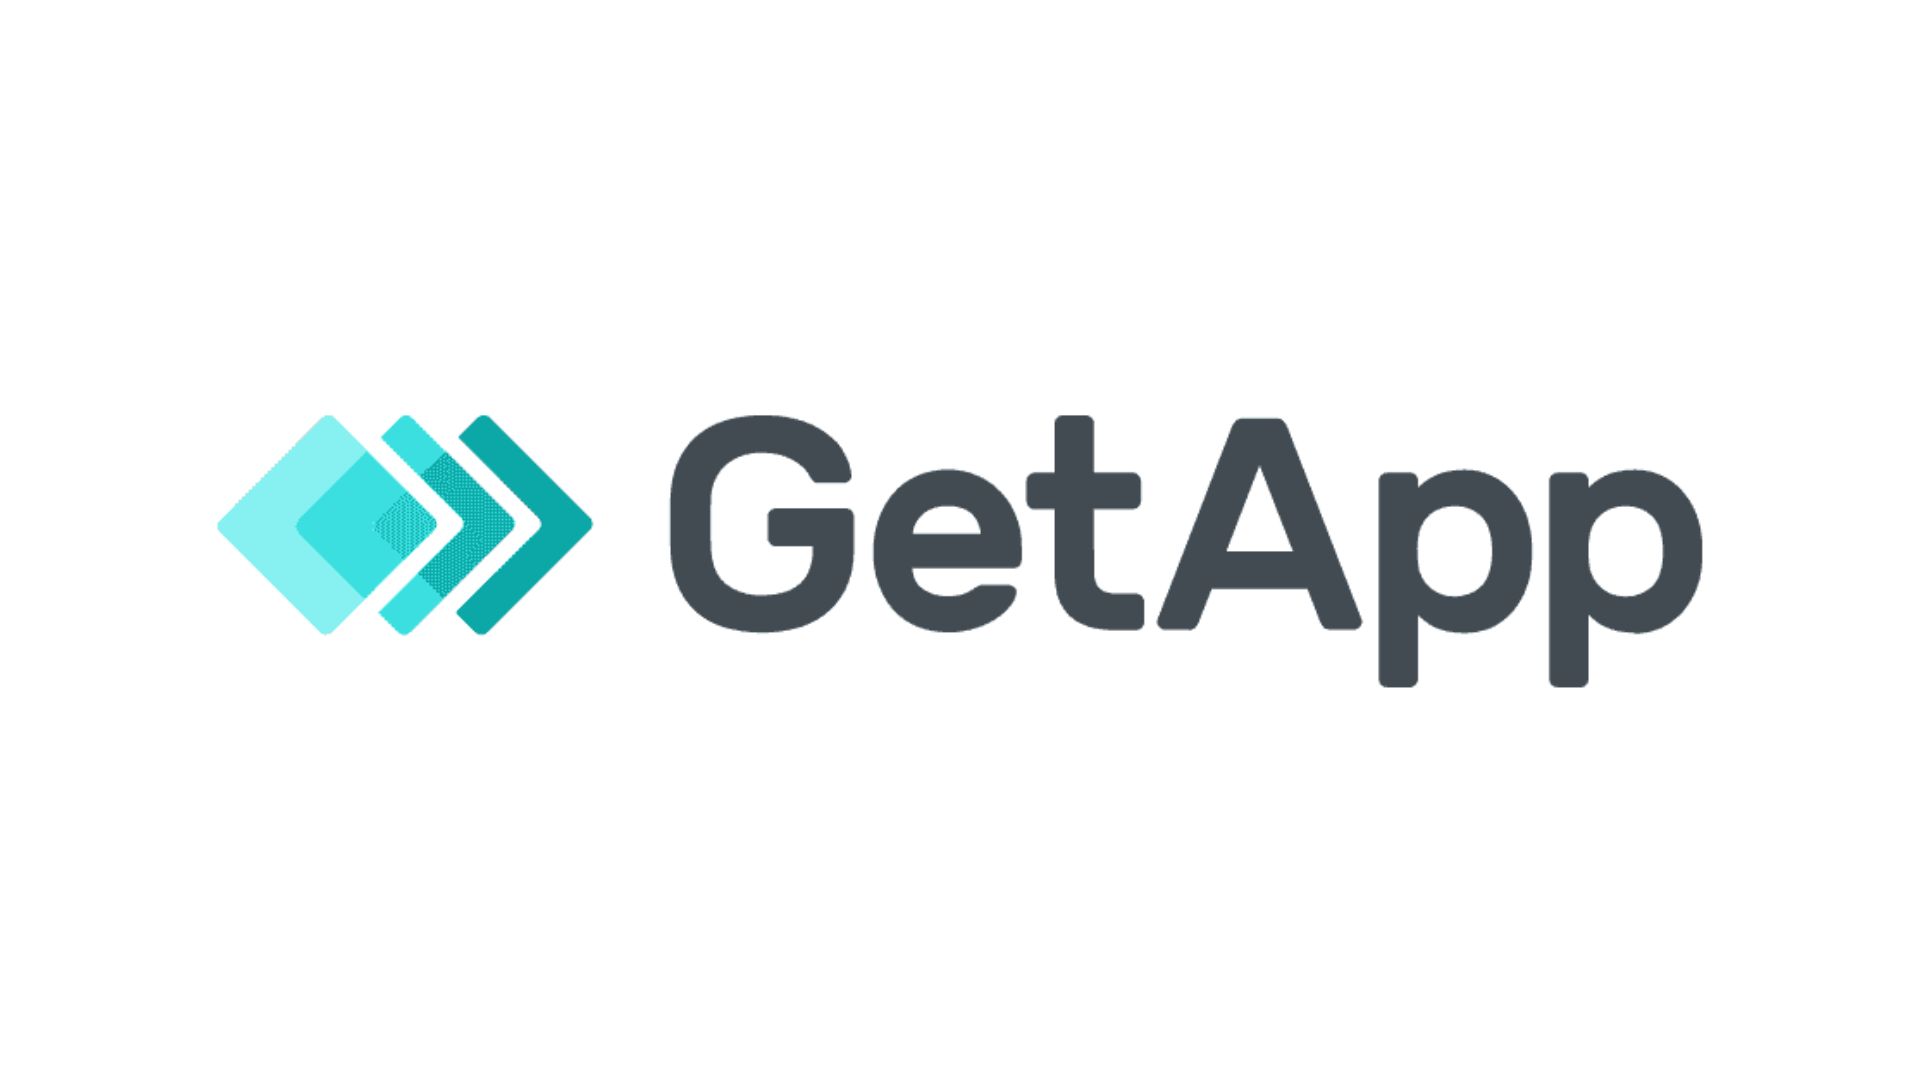 Review Sites - GetApp